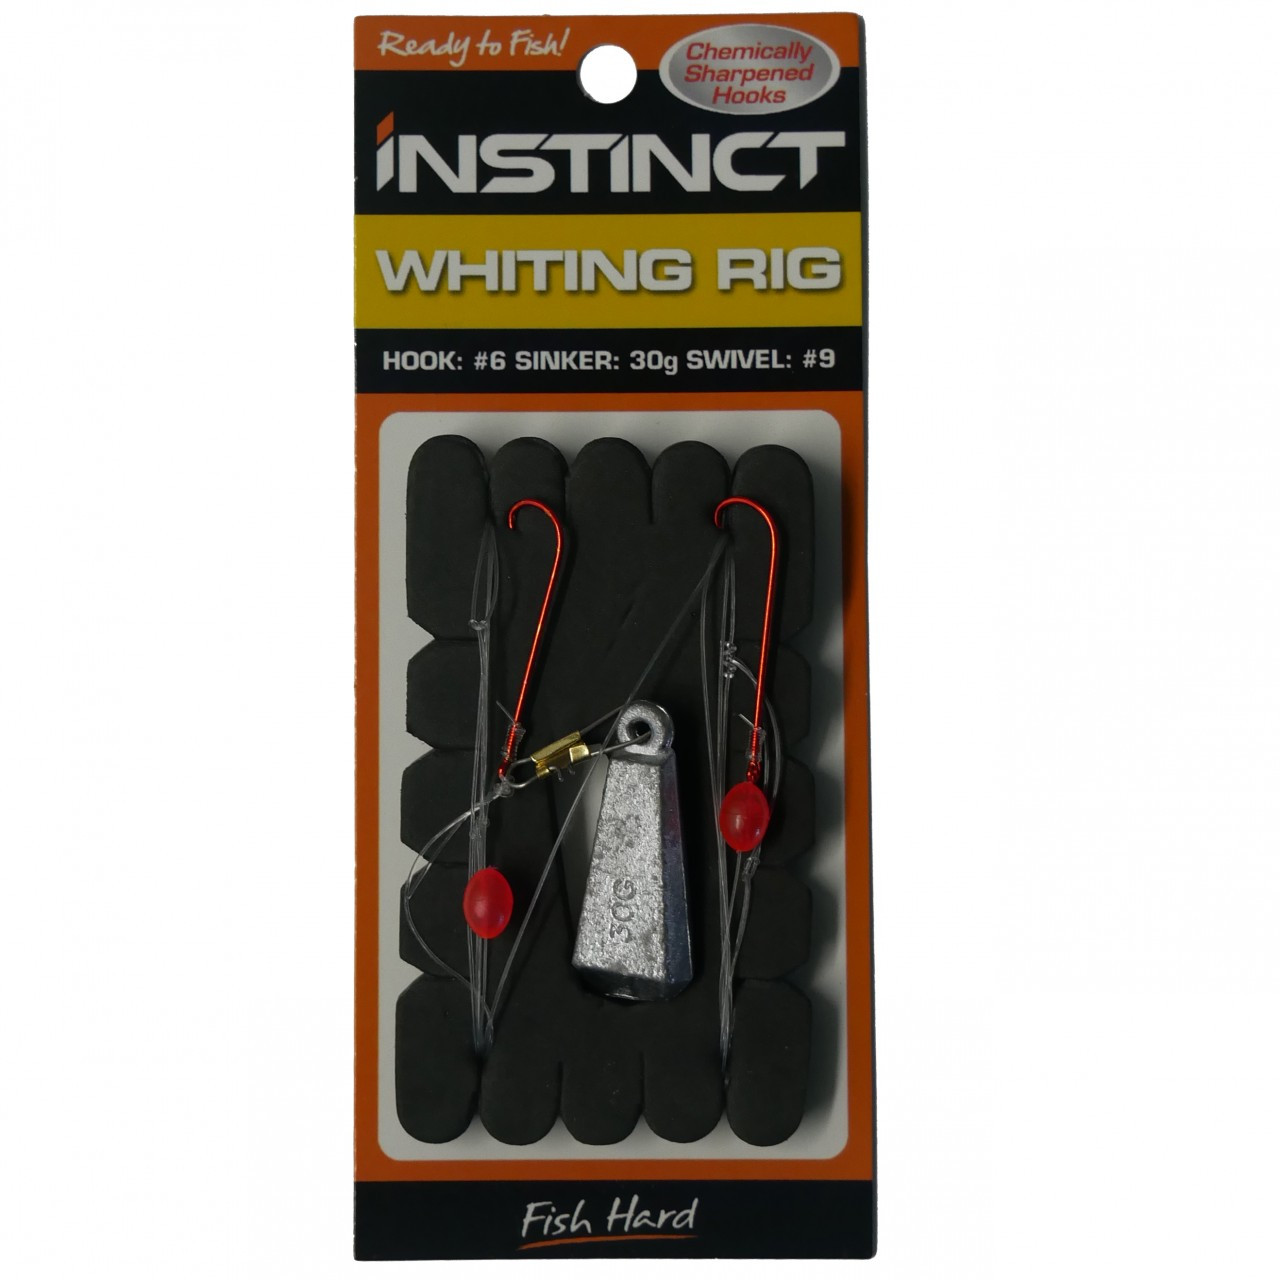 Instinct Whiting Rig - Size #6 Hook - 30g Sinker - Tackle World